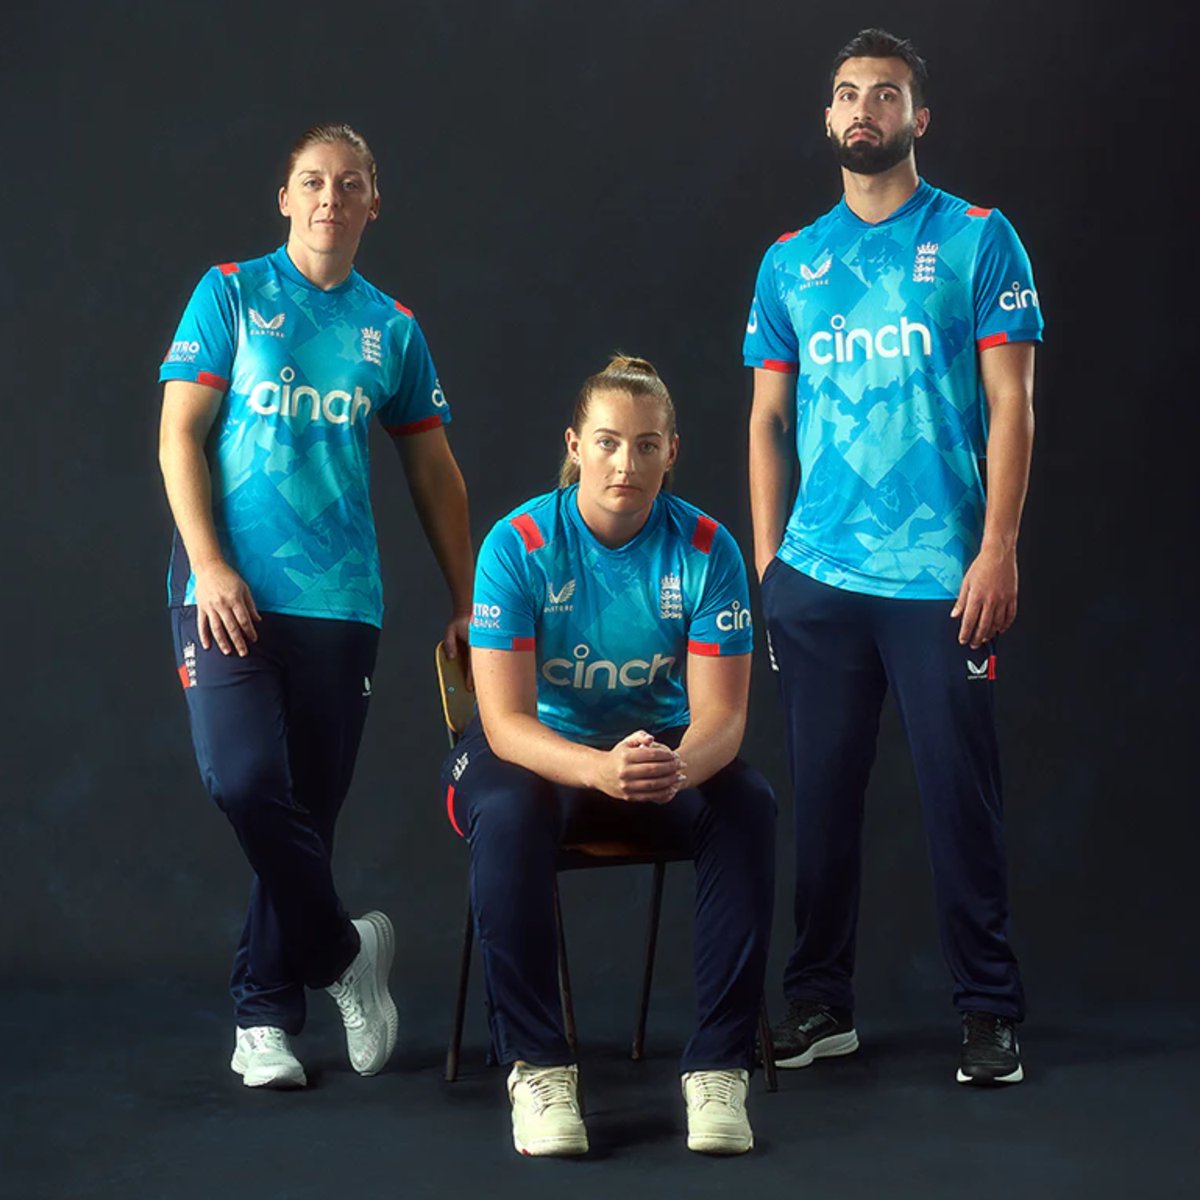 England's new ODI kit 🏴󠁧󠁢󠁥󠁮󠁧󠁿 (📸: @englandcricket)